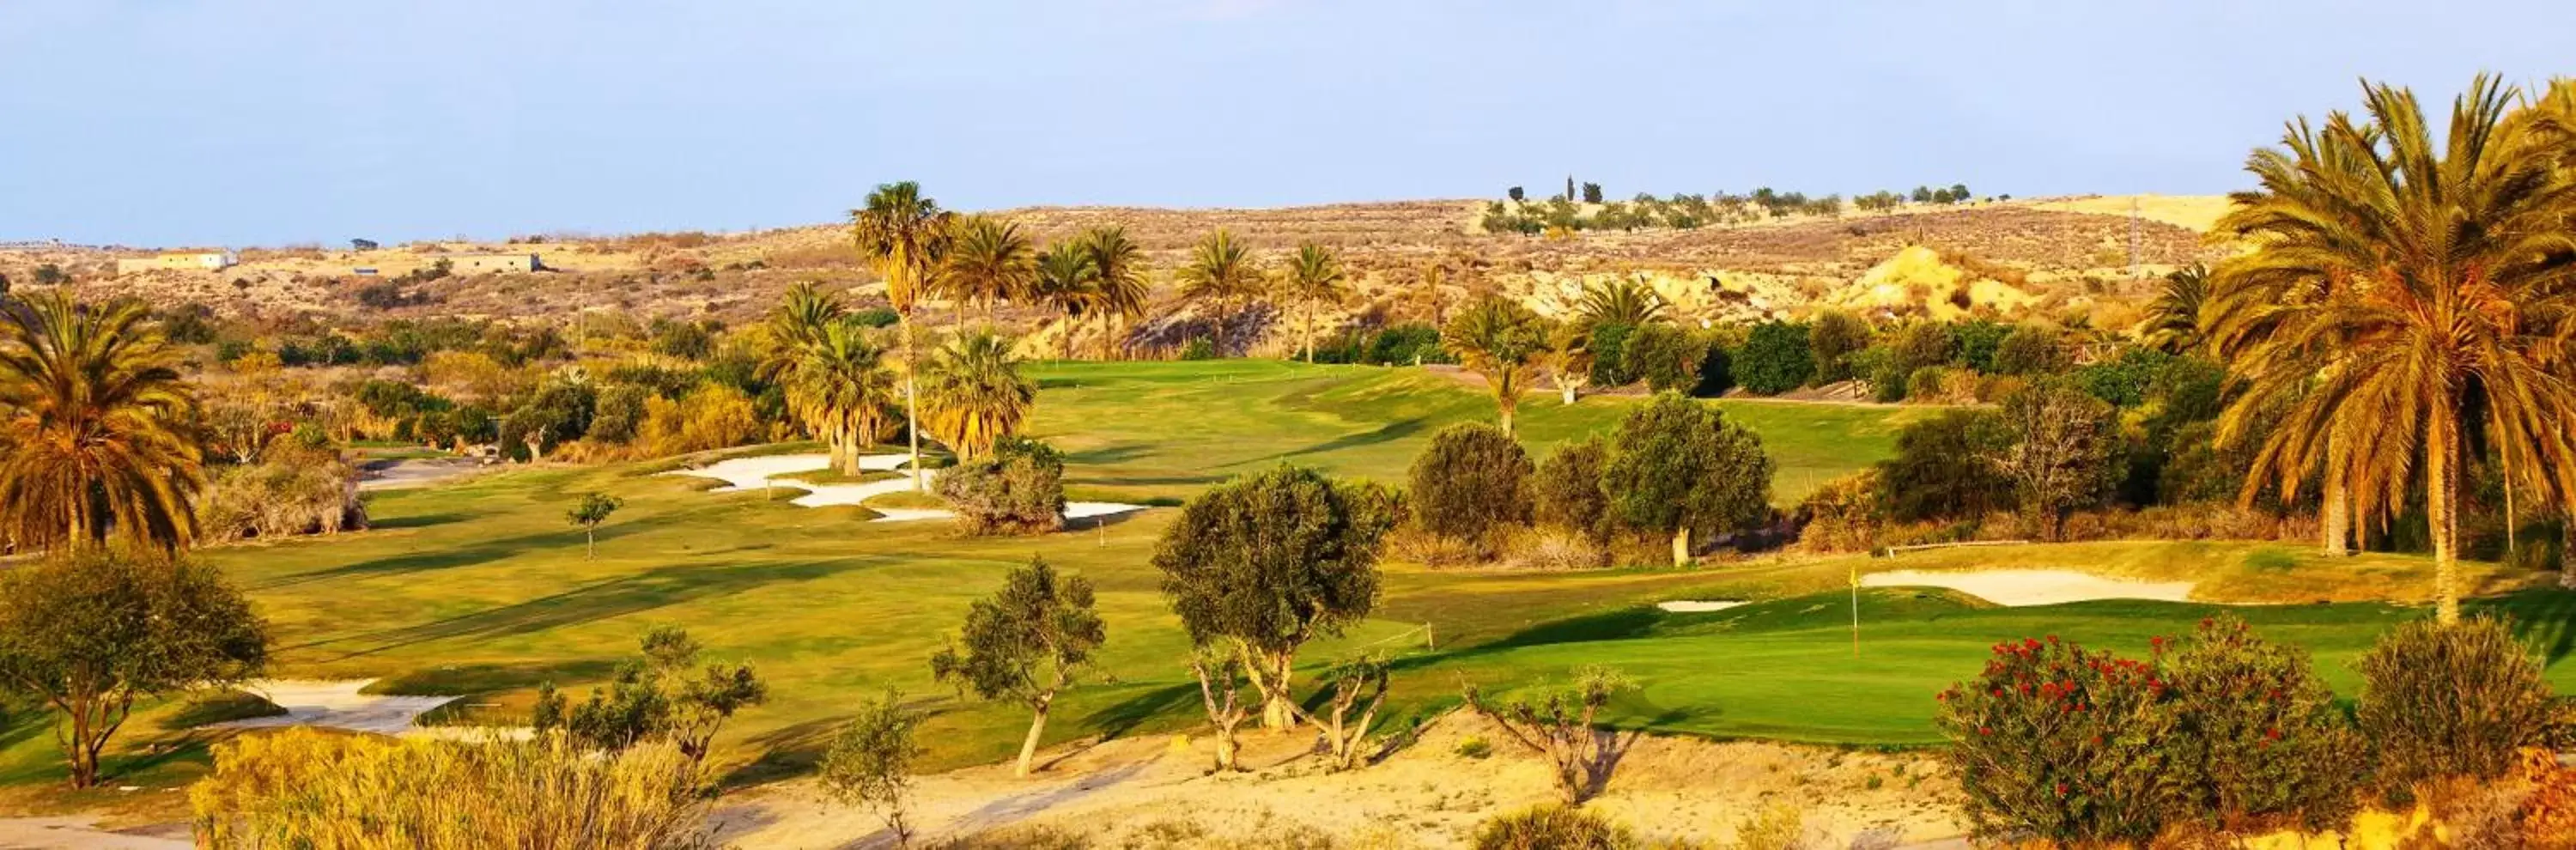 Golfcourse, Golf in Valle Del Este Golf Resort